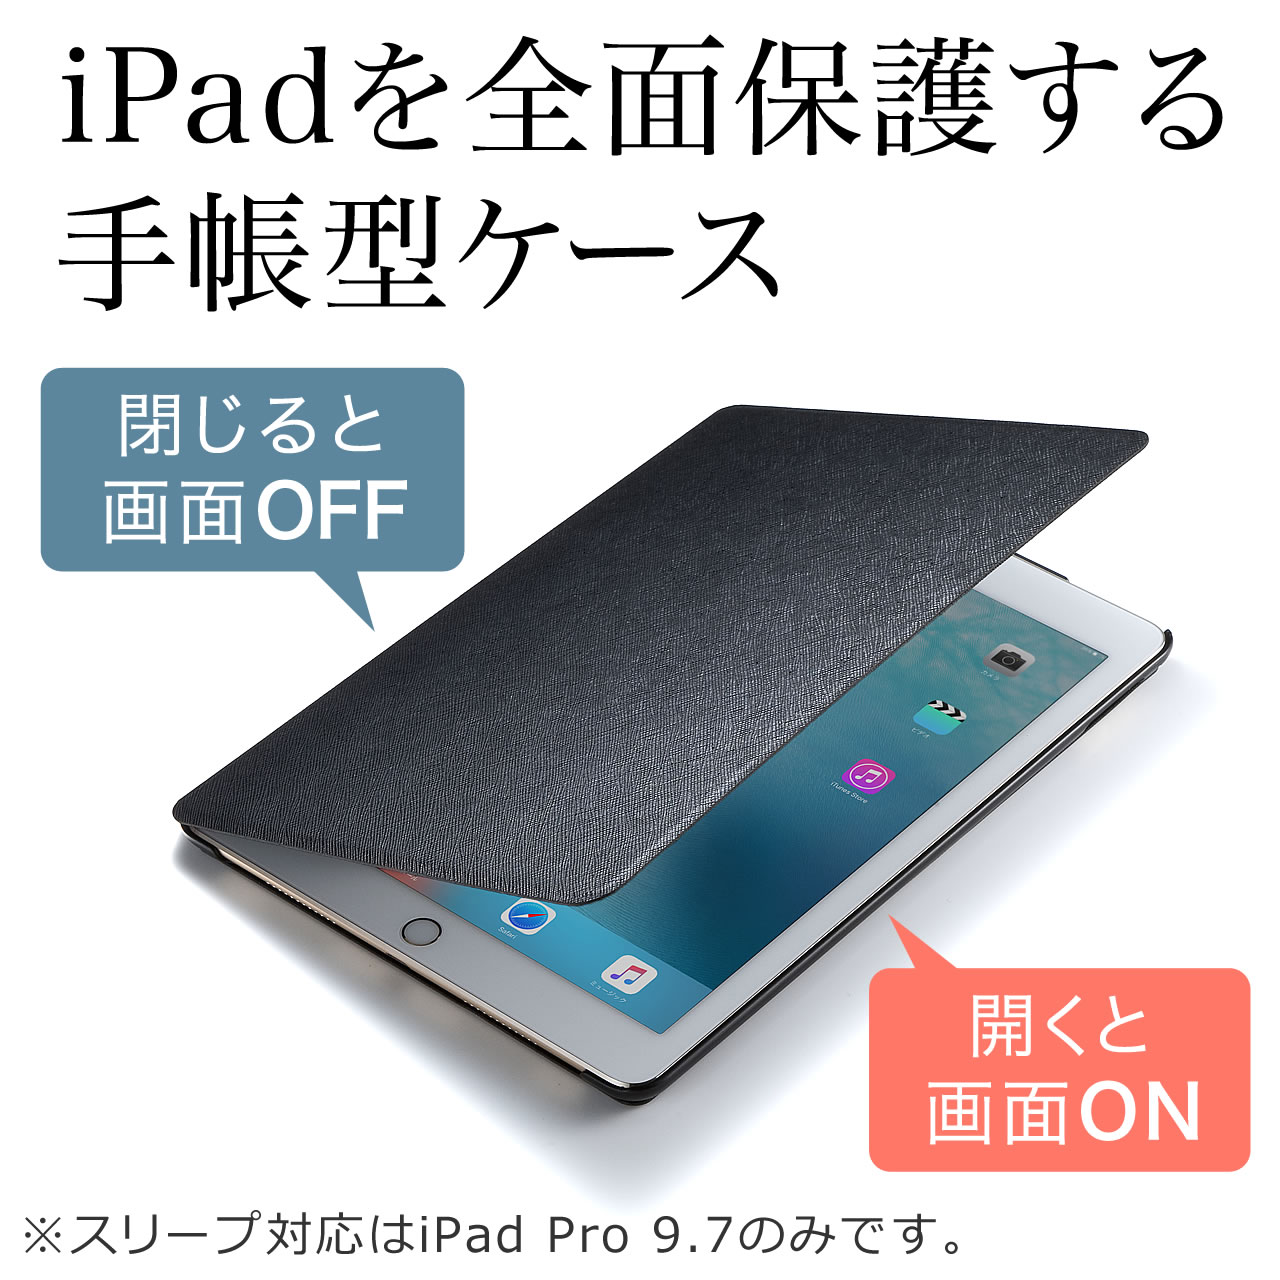 9.7C`iPad ProP[Xicu/uX^h@\ΉE360]E蒠^j 200-TABC006